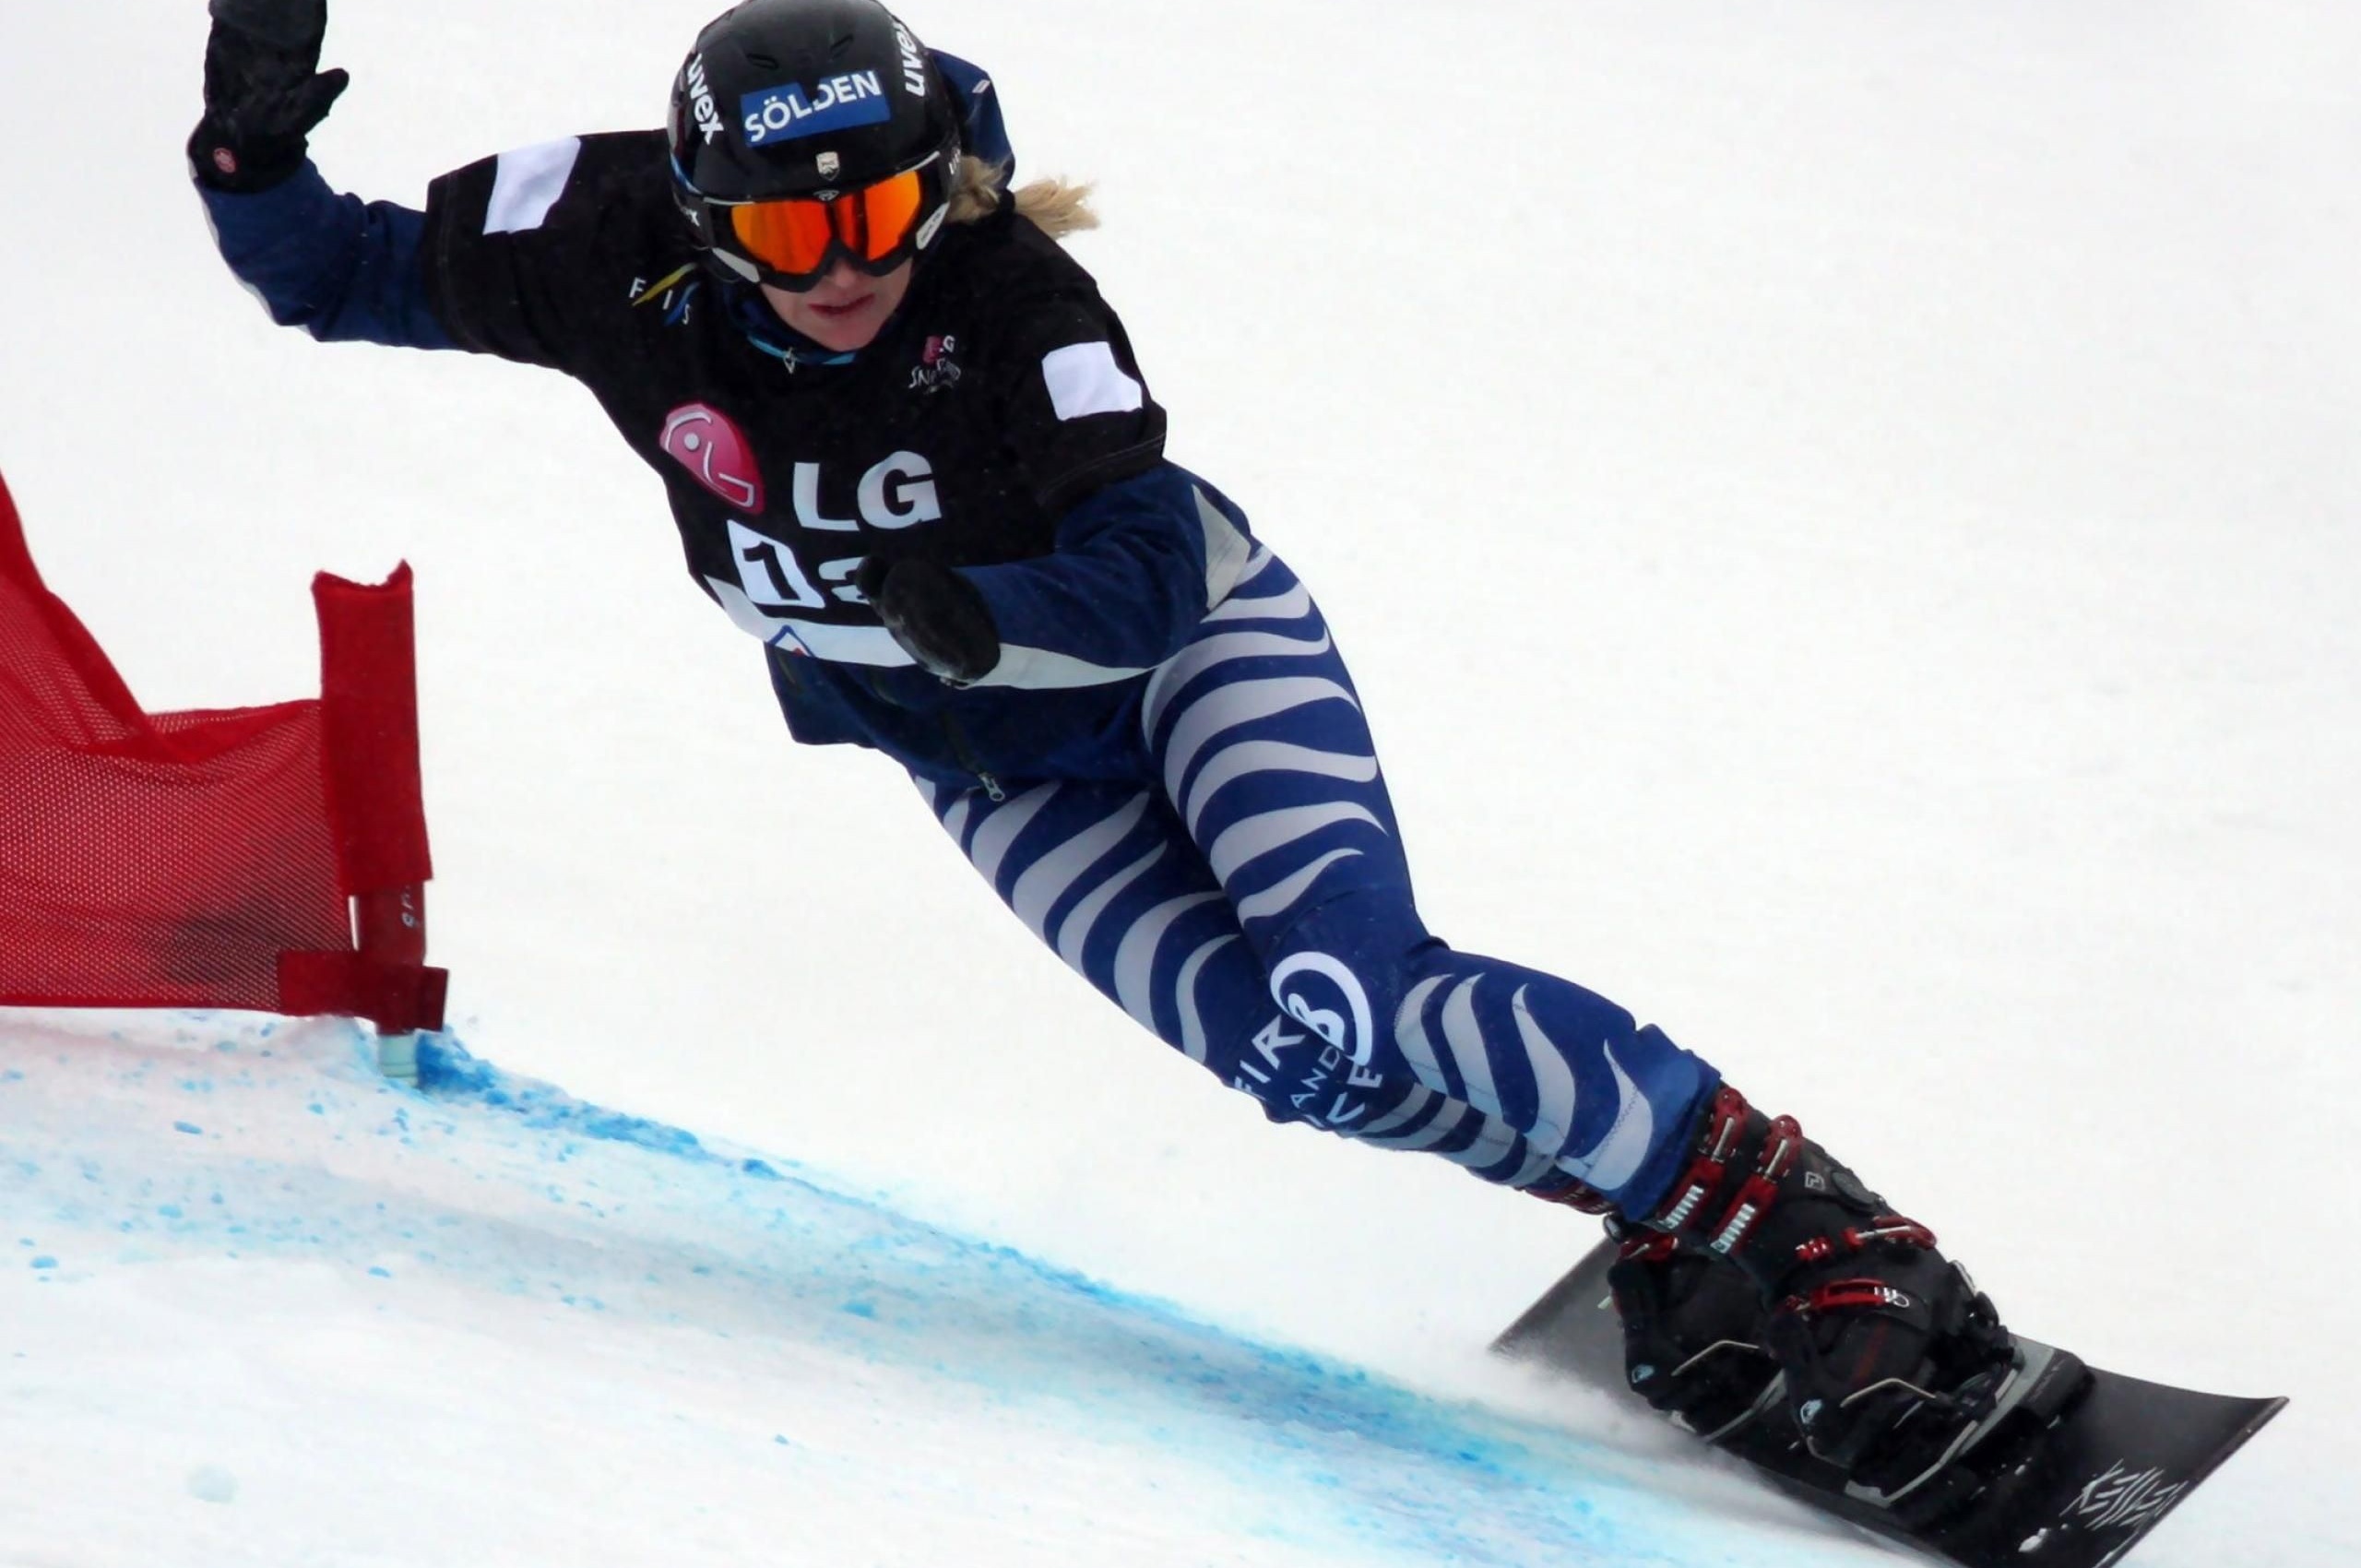 Amelie Kober Germany Snowboarding Athlete London Olympics